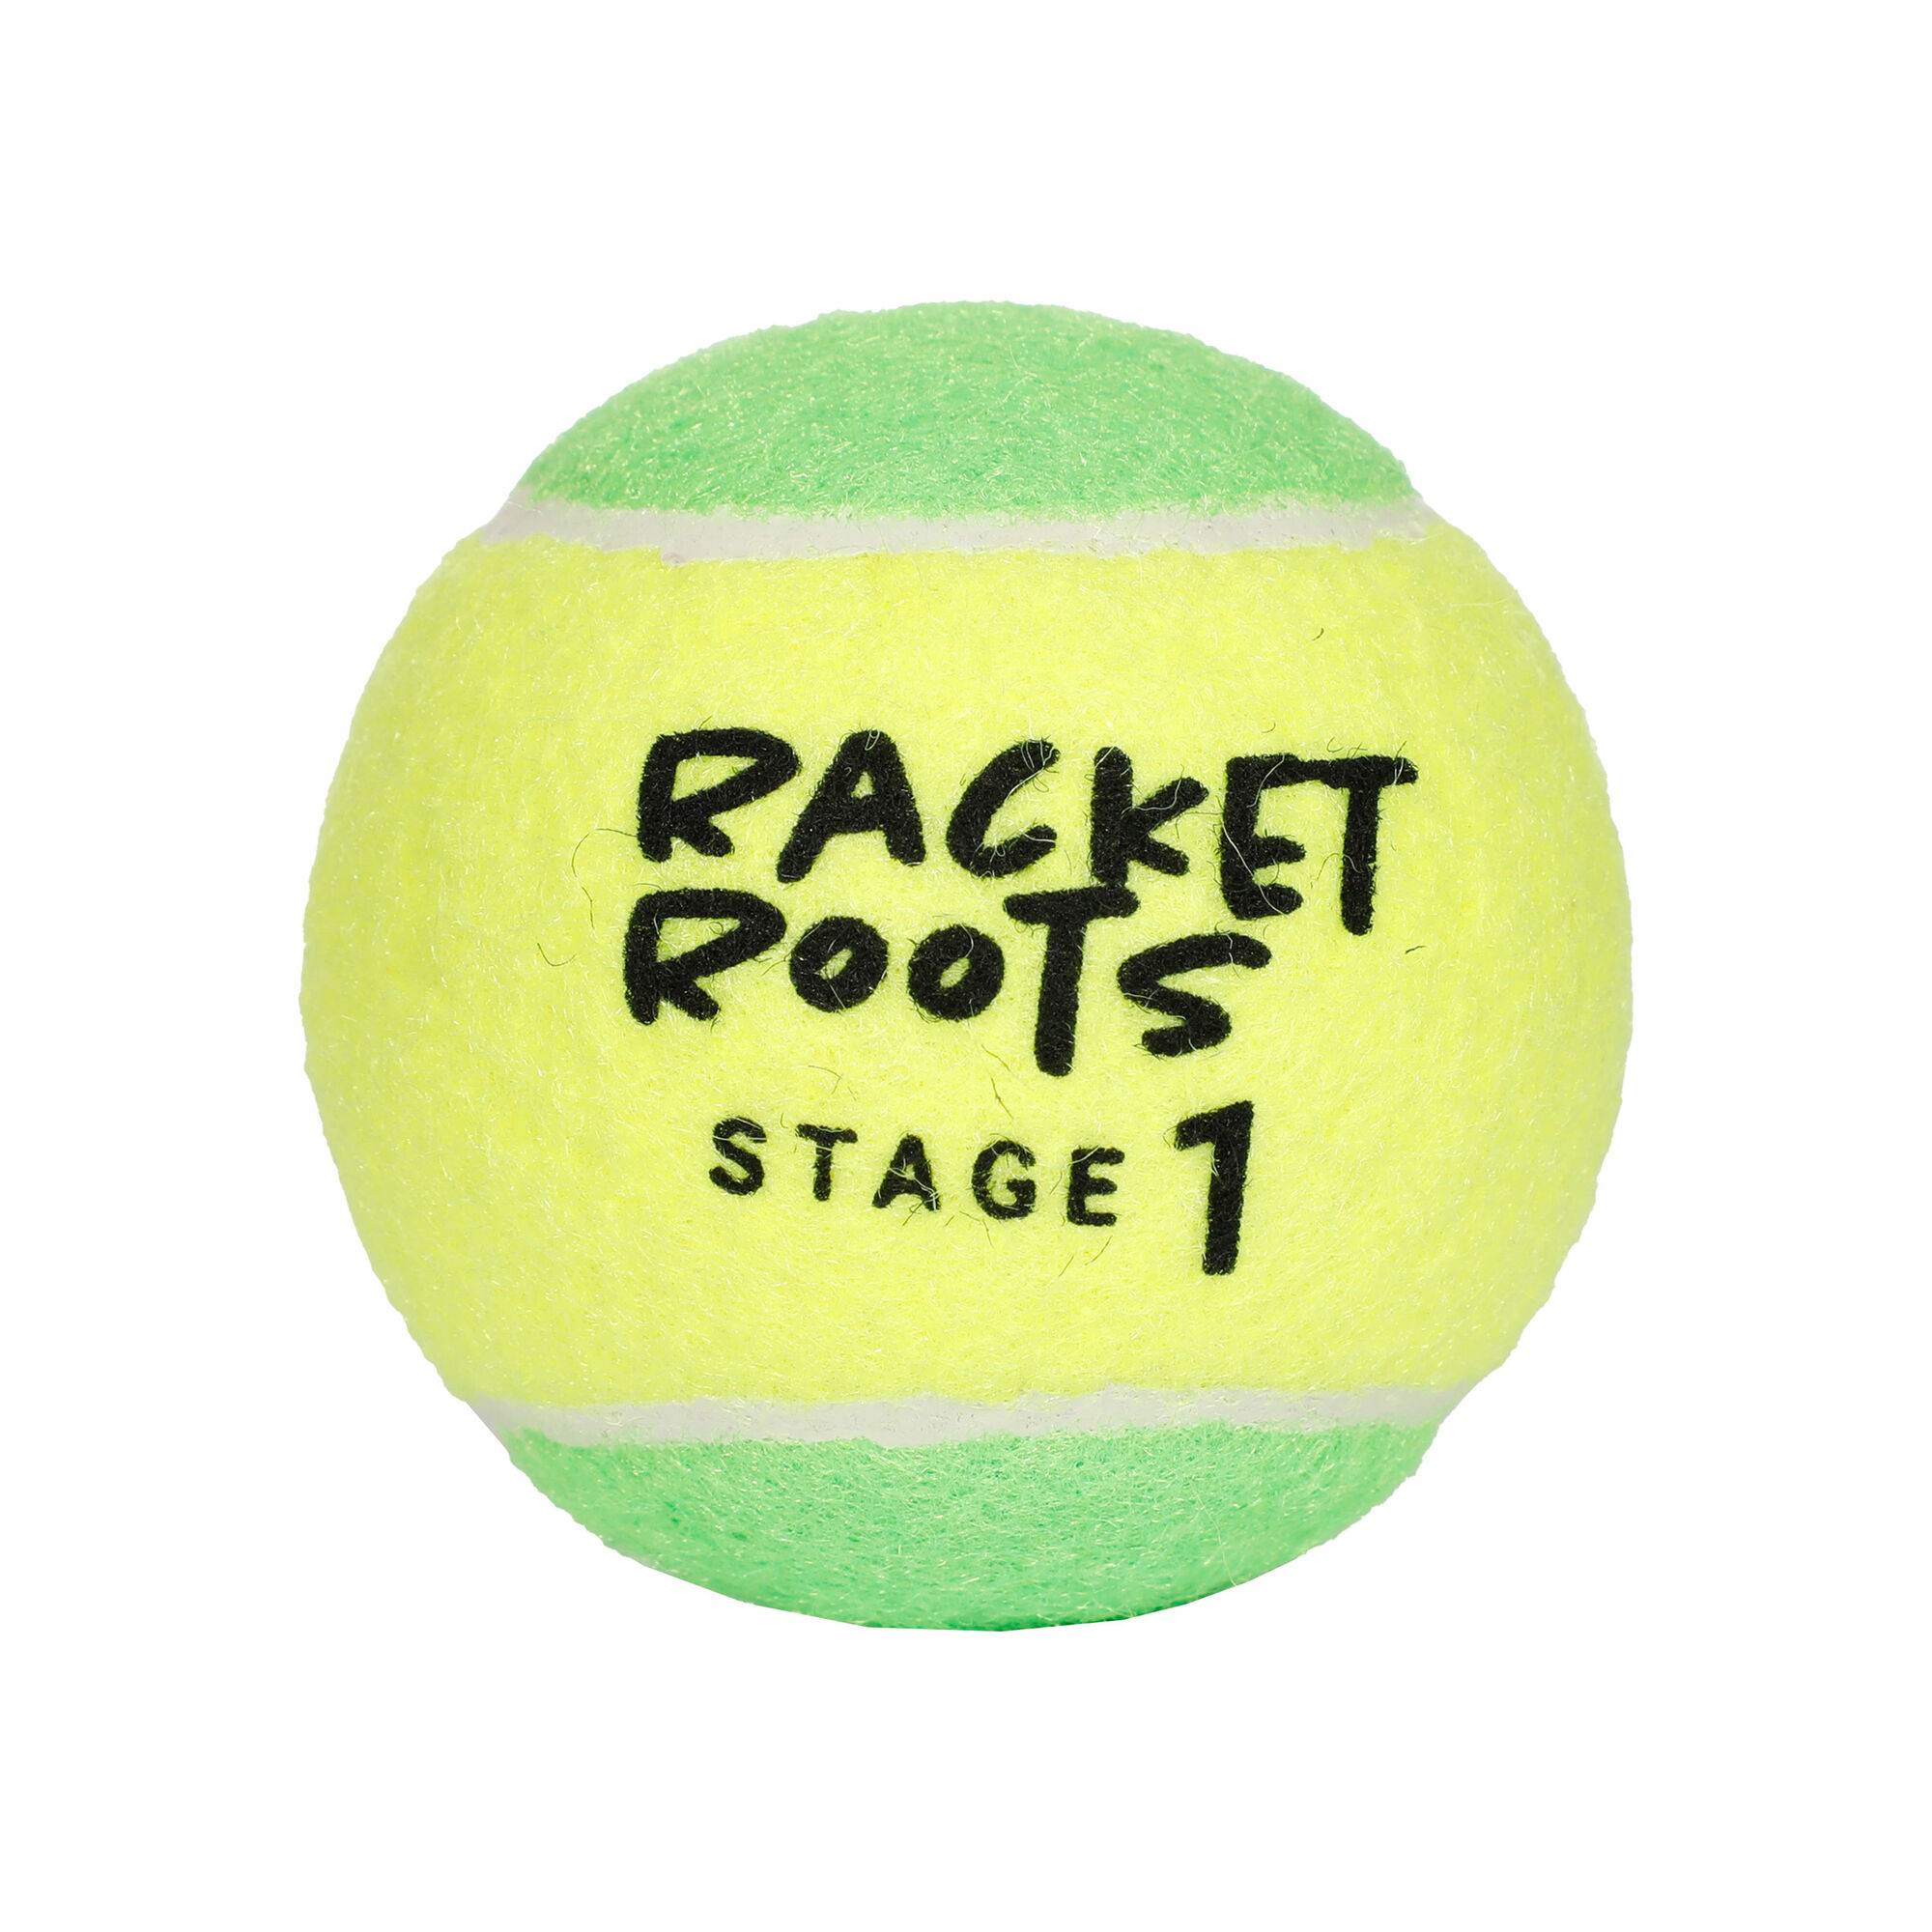 Racket Roots